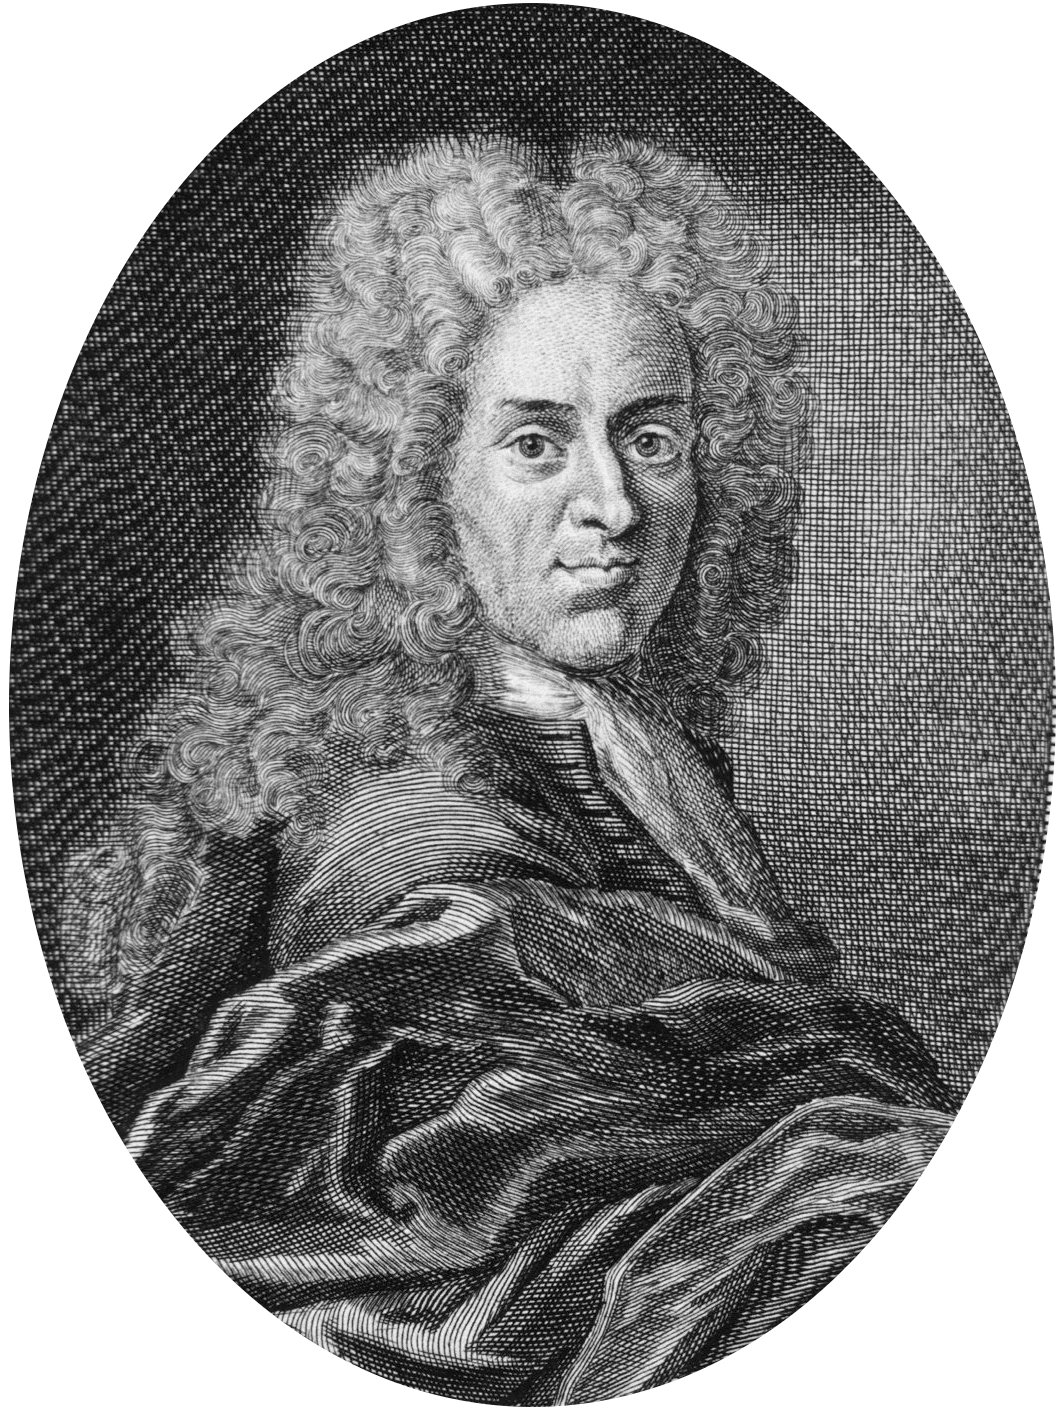 Sébastien Vaillant